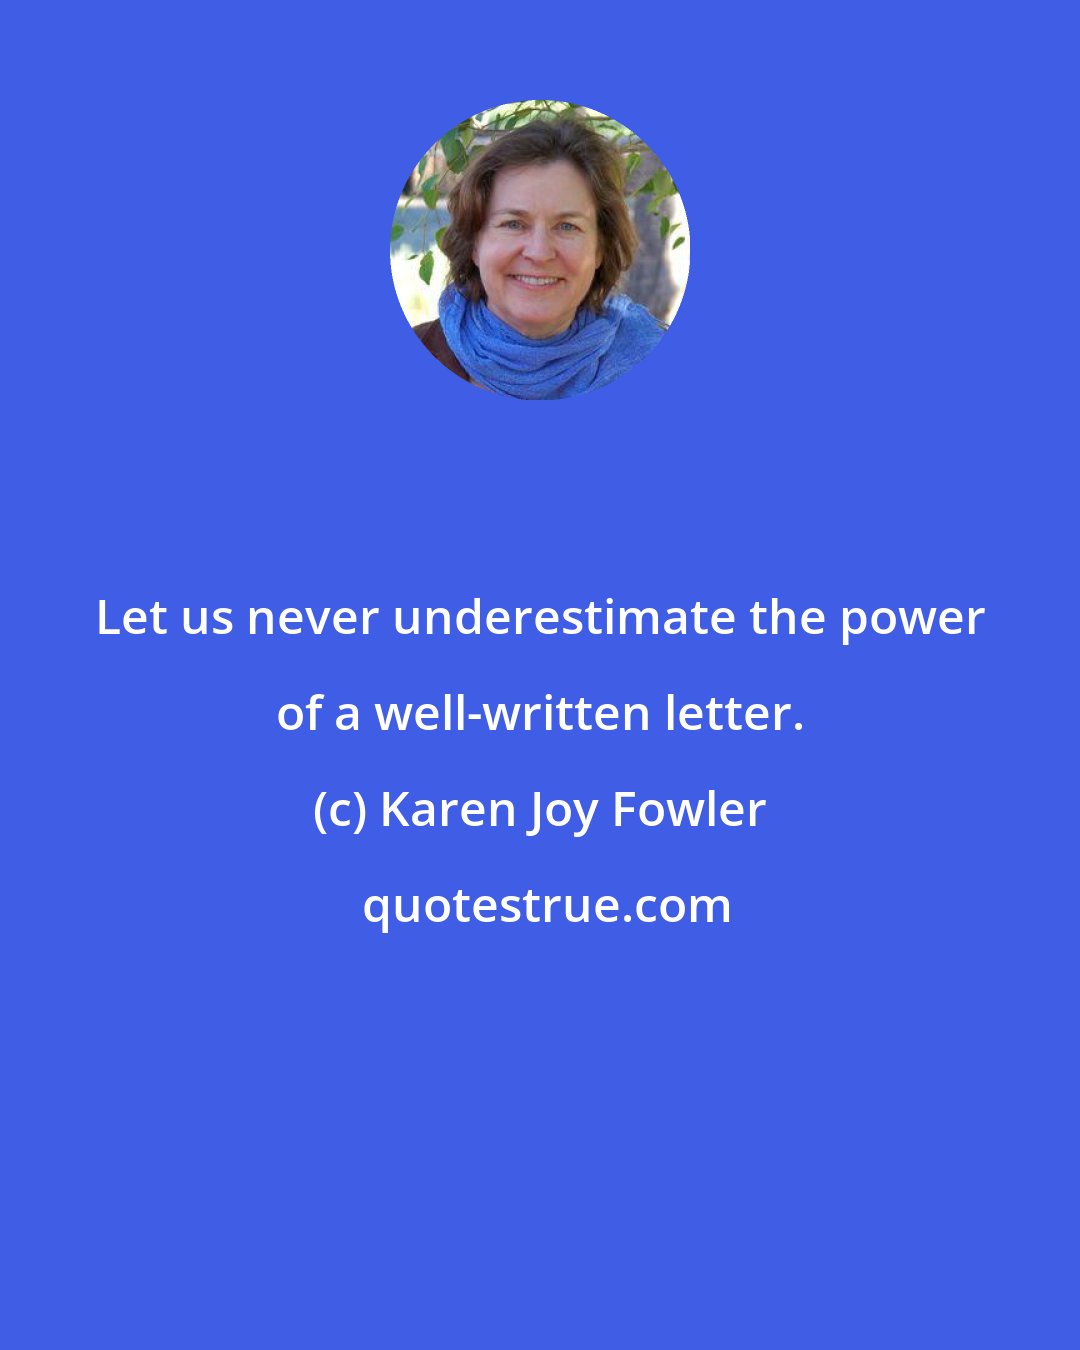 Karen Joy Fowler: Let us never underestimate the power of a well-written letter.